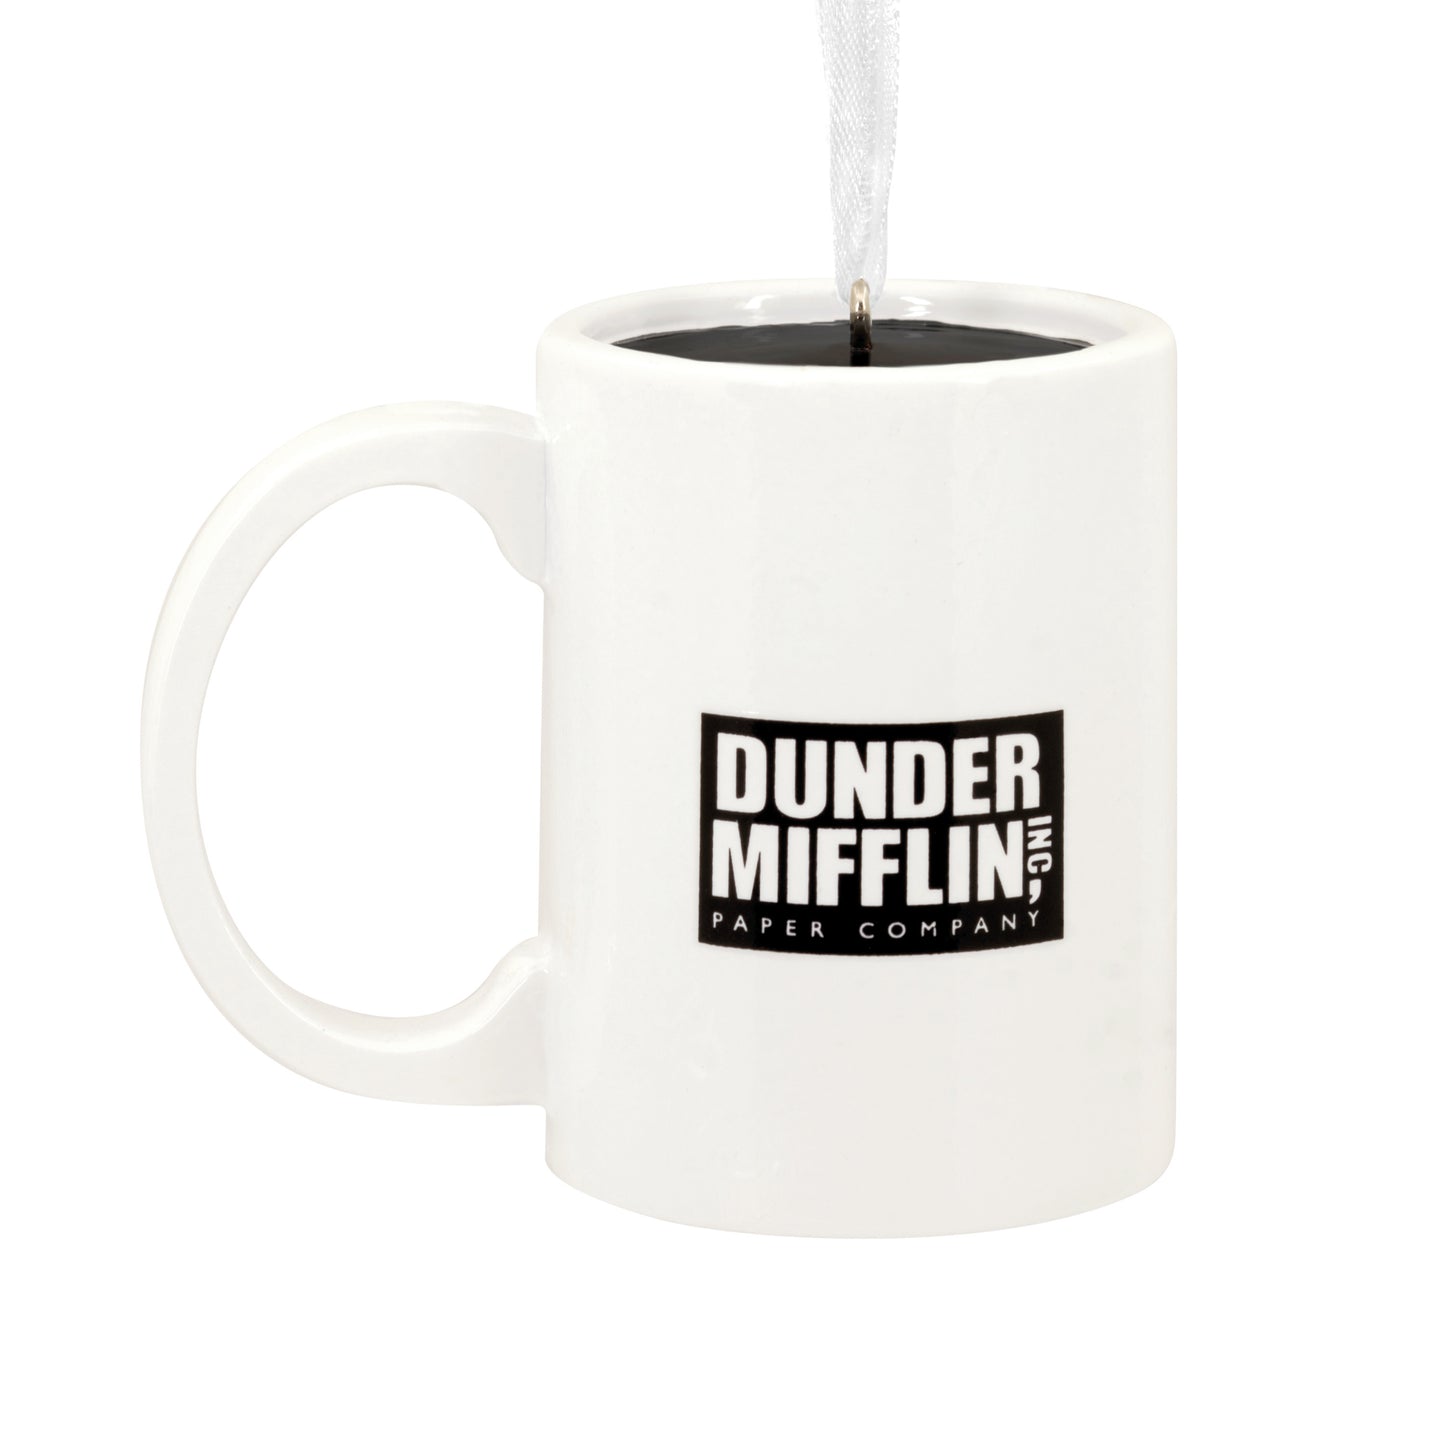 The Office World's Best Boss Mug Ornament